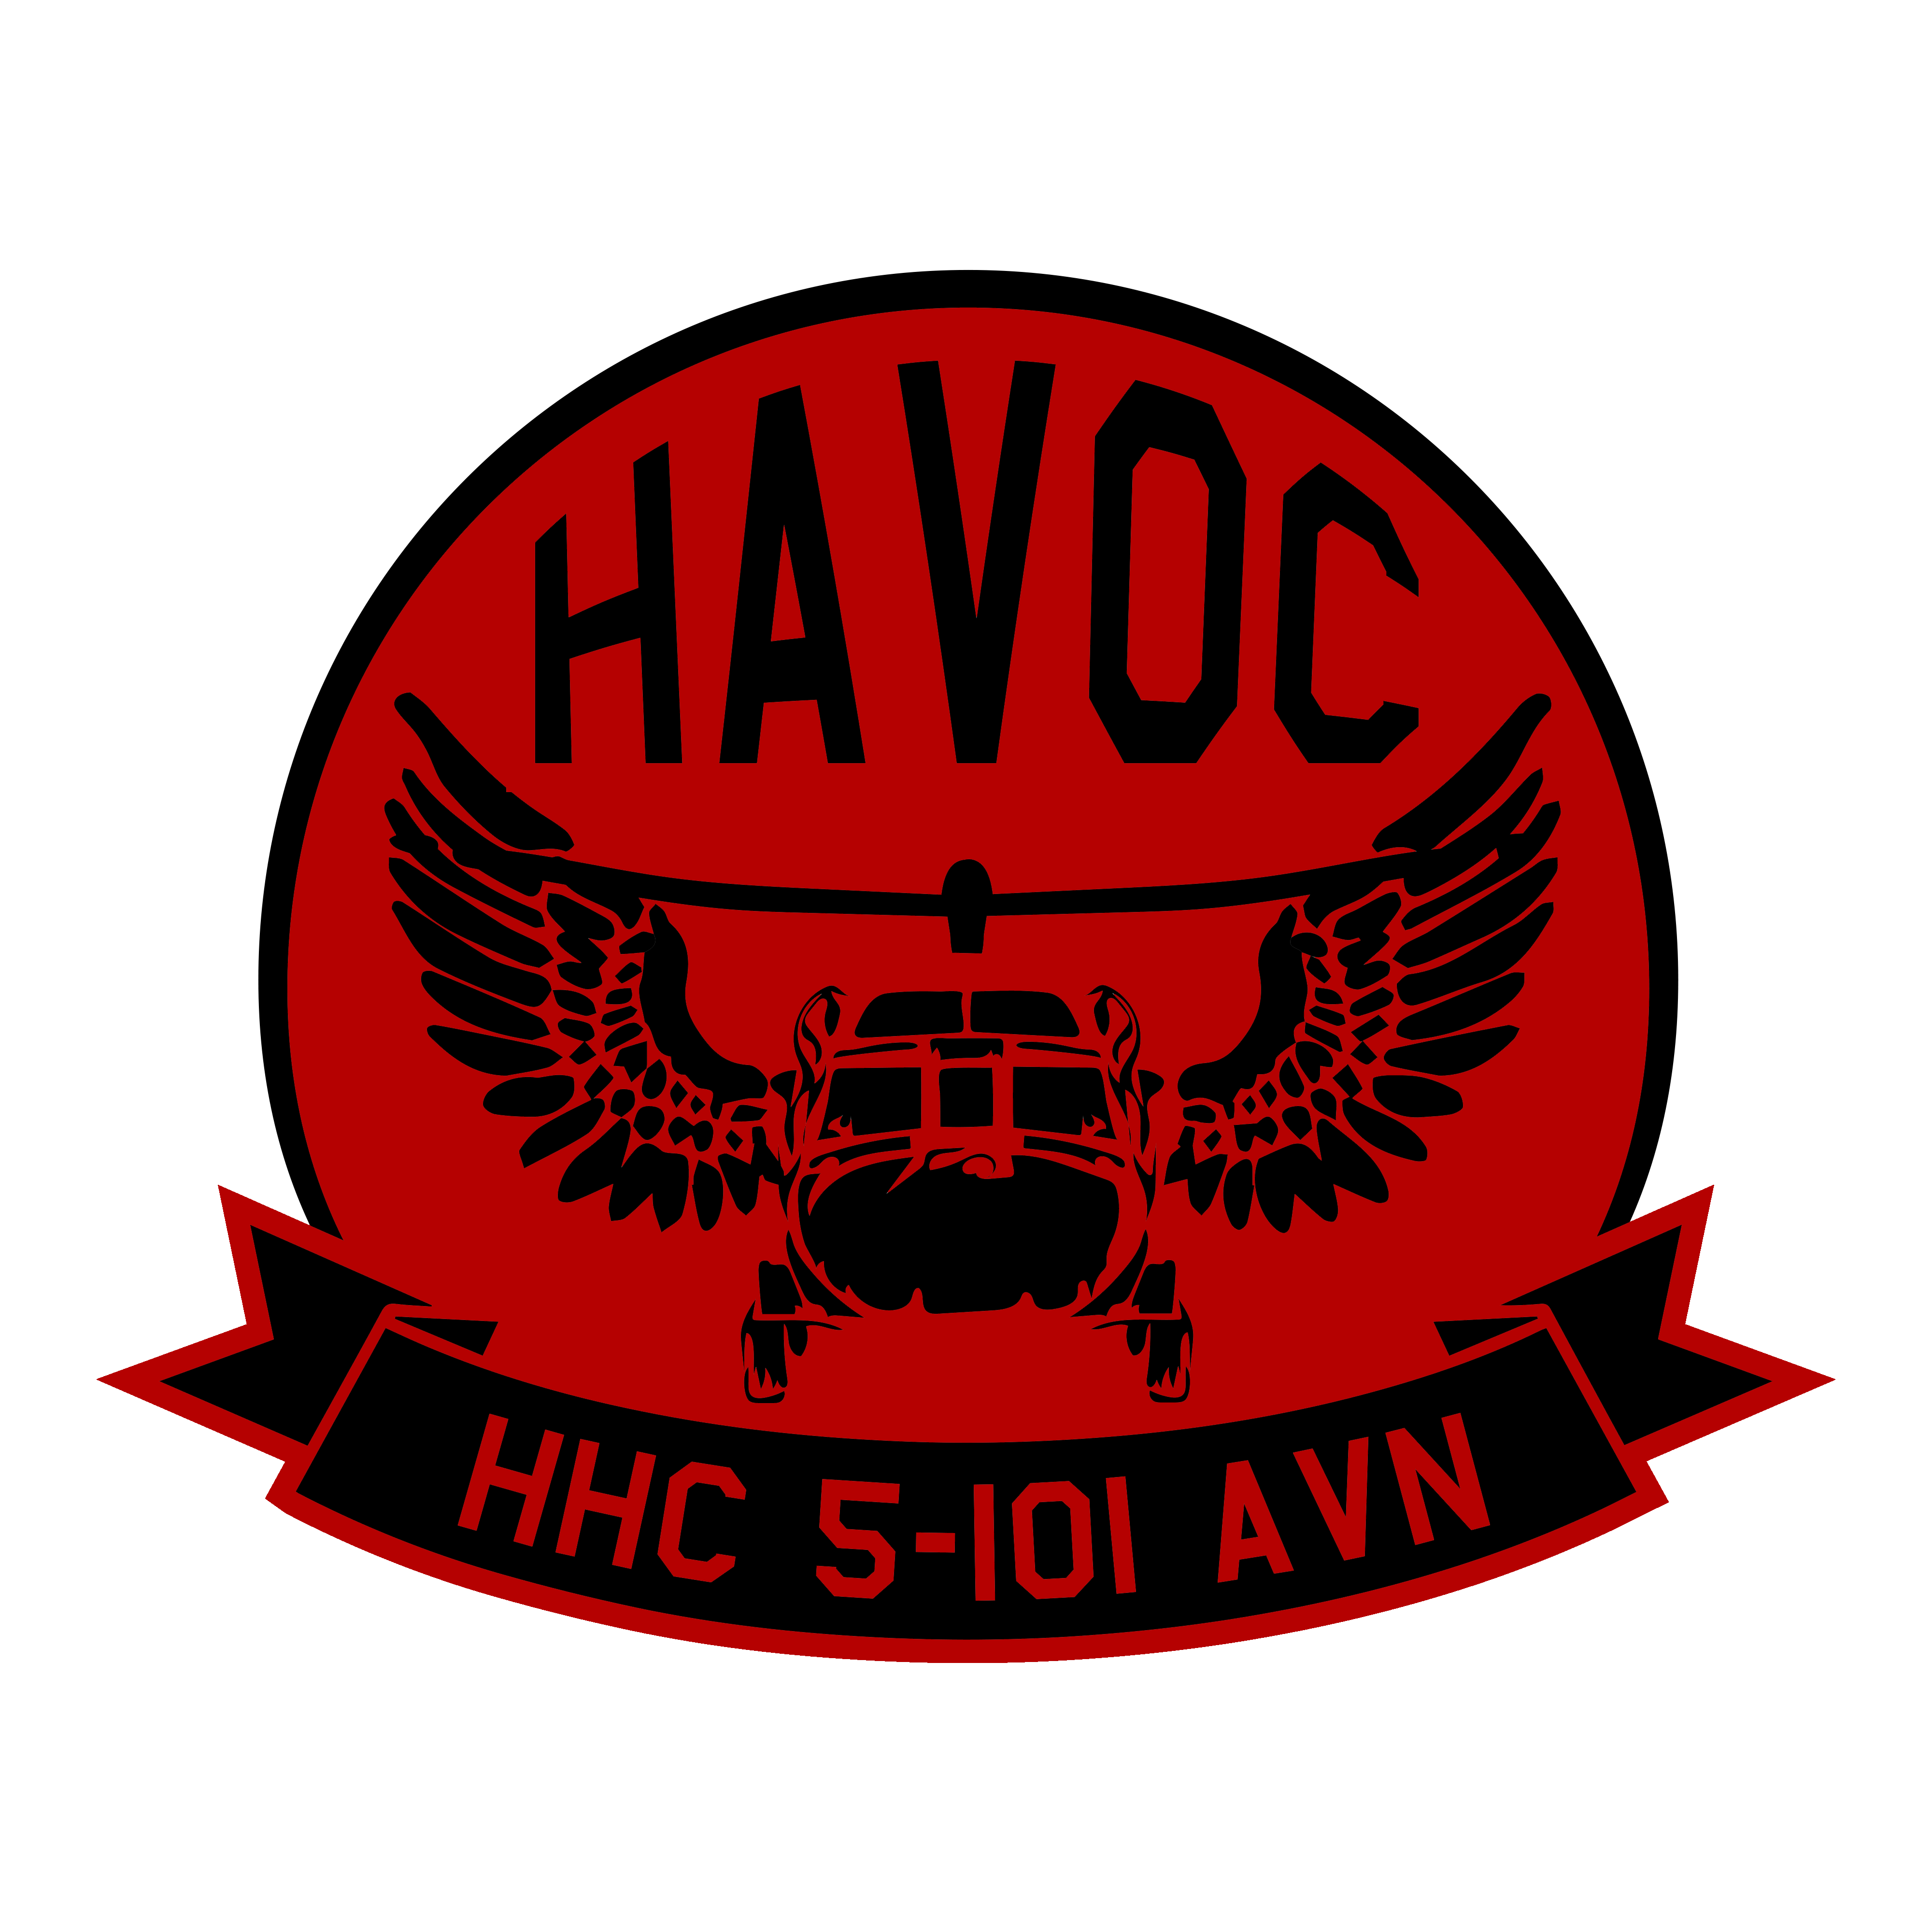 HHC, 5-101 AVN "Havoc"